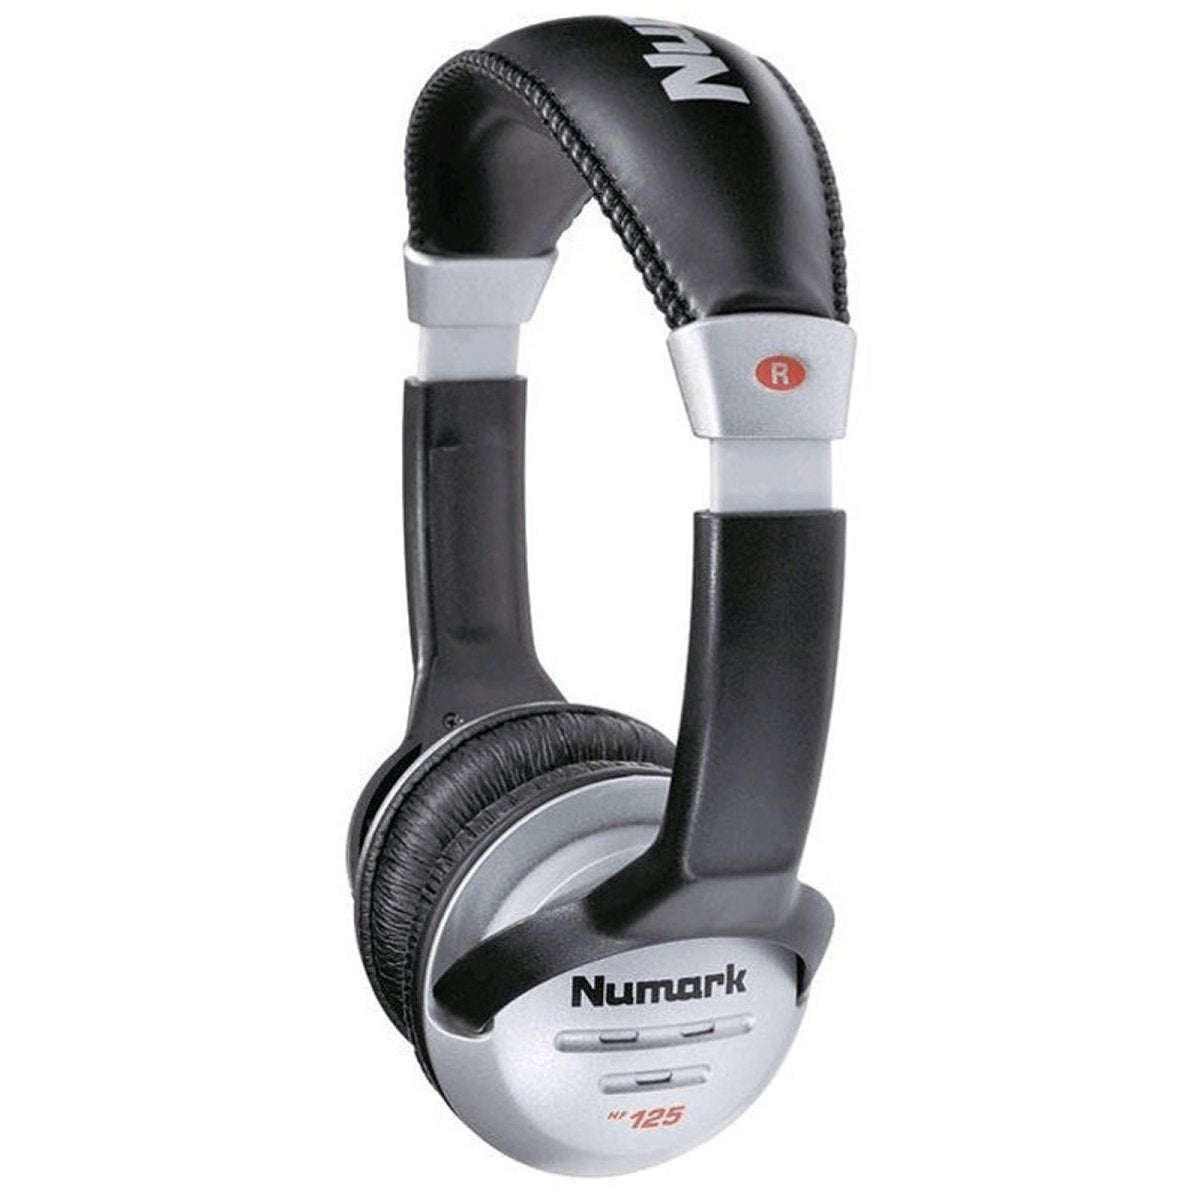 Numark HF125 / HF 125 Compact DJ Stereo Studio On-Ear Headphones | Atlantic Electrics